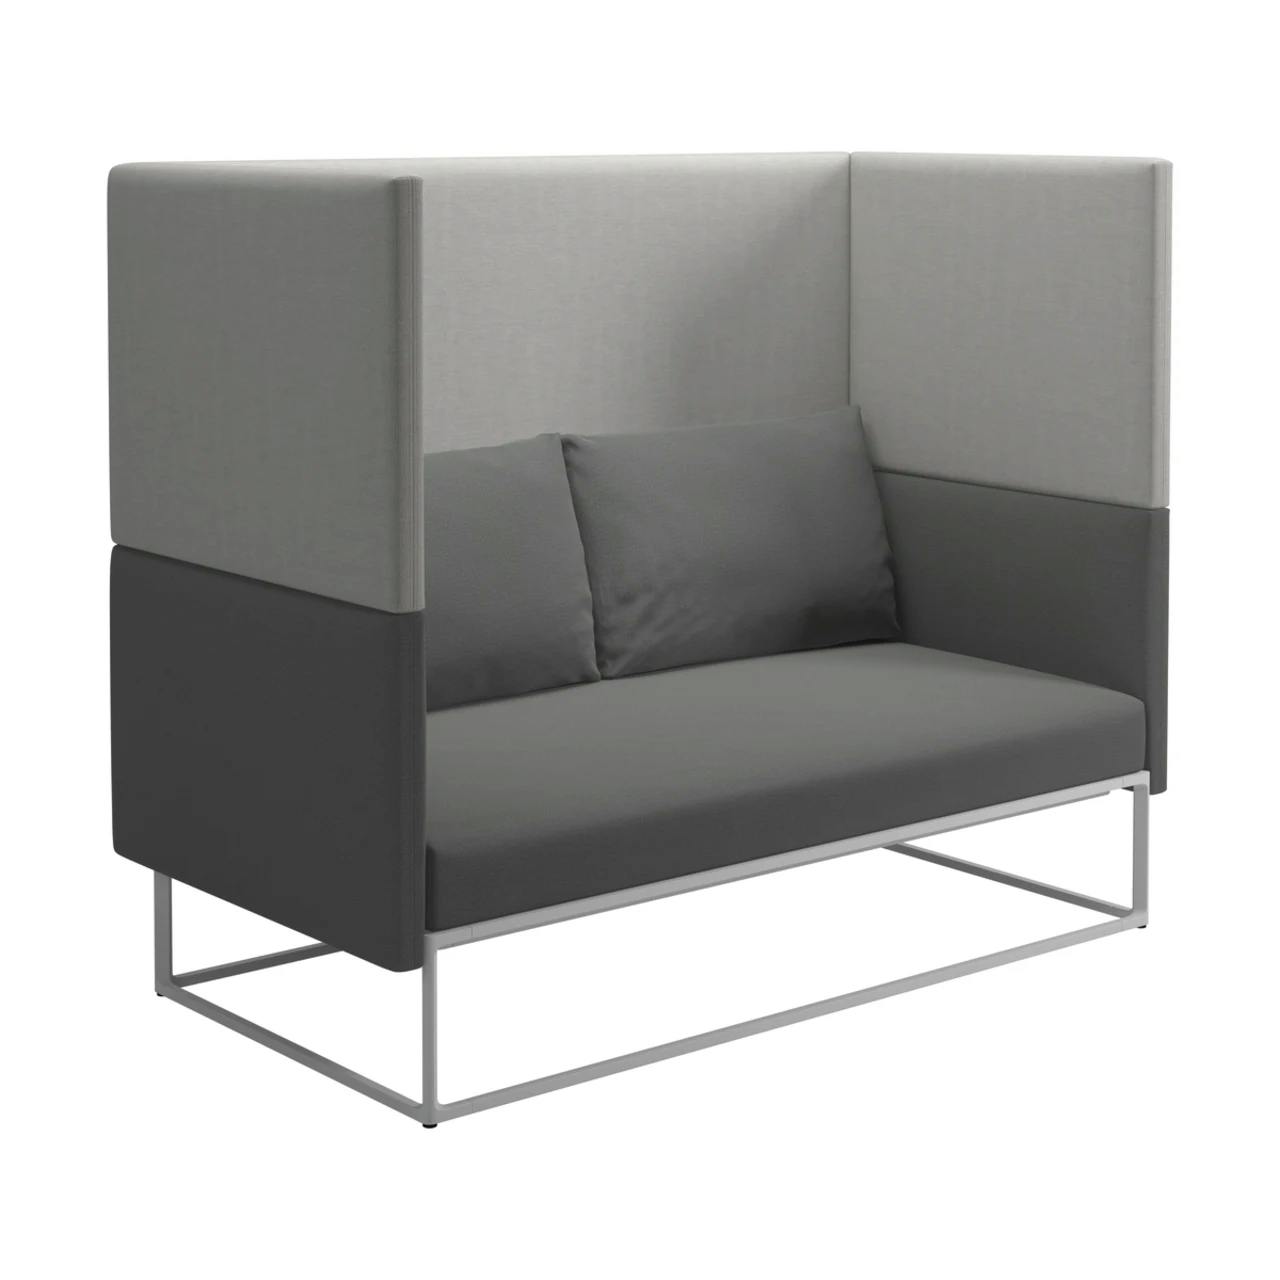 Frame: Powder-Coated Aluminum, White | Seat & Sling Fabric: Blend Fog & Seagull